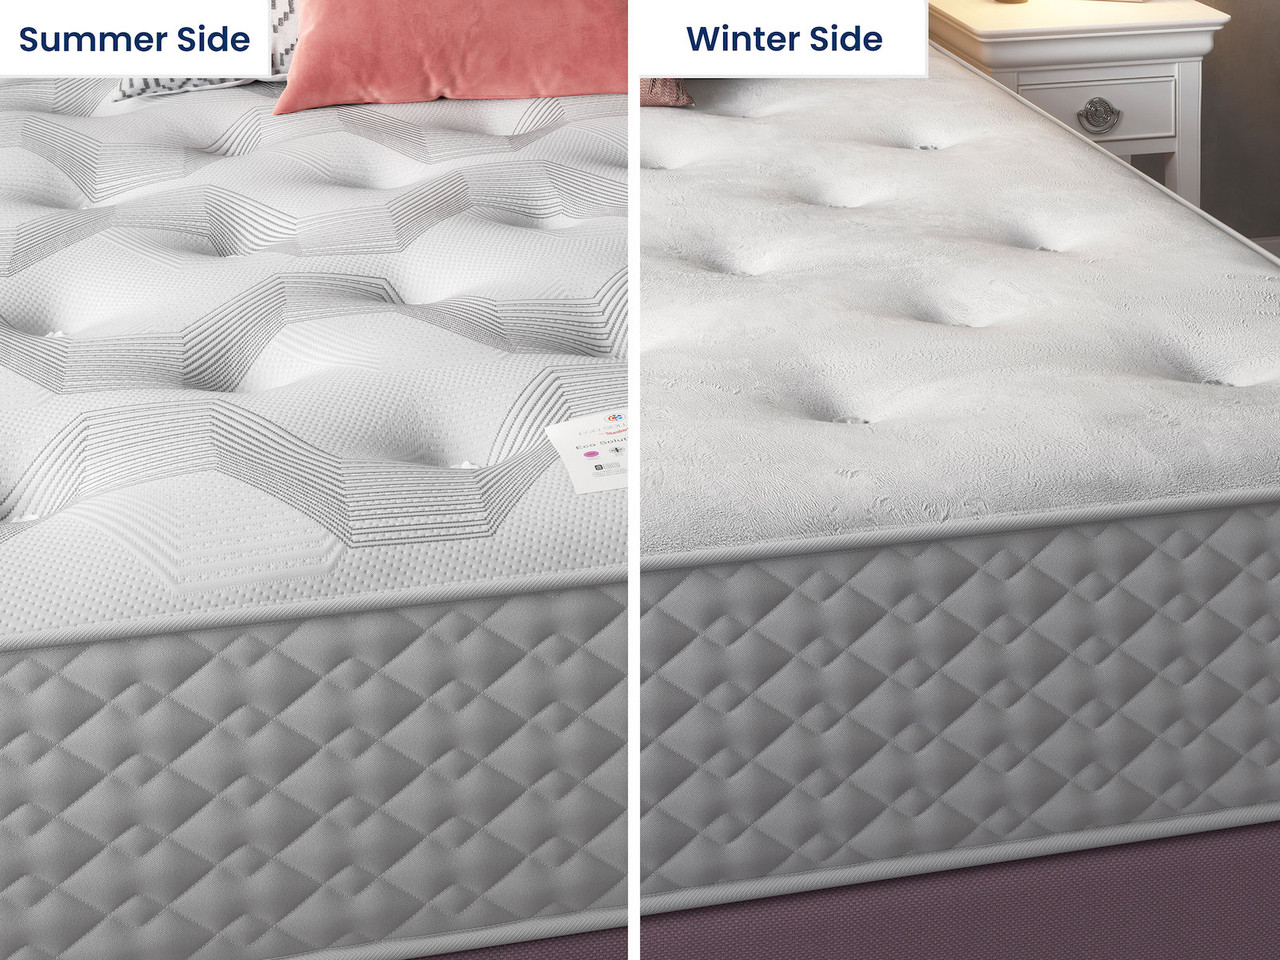 Slumberland Eco Solutions 1000 Mattress - split image showing summer side and winter side